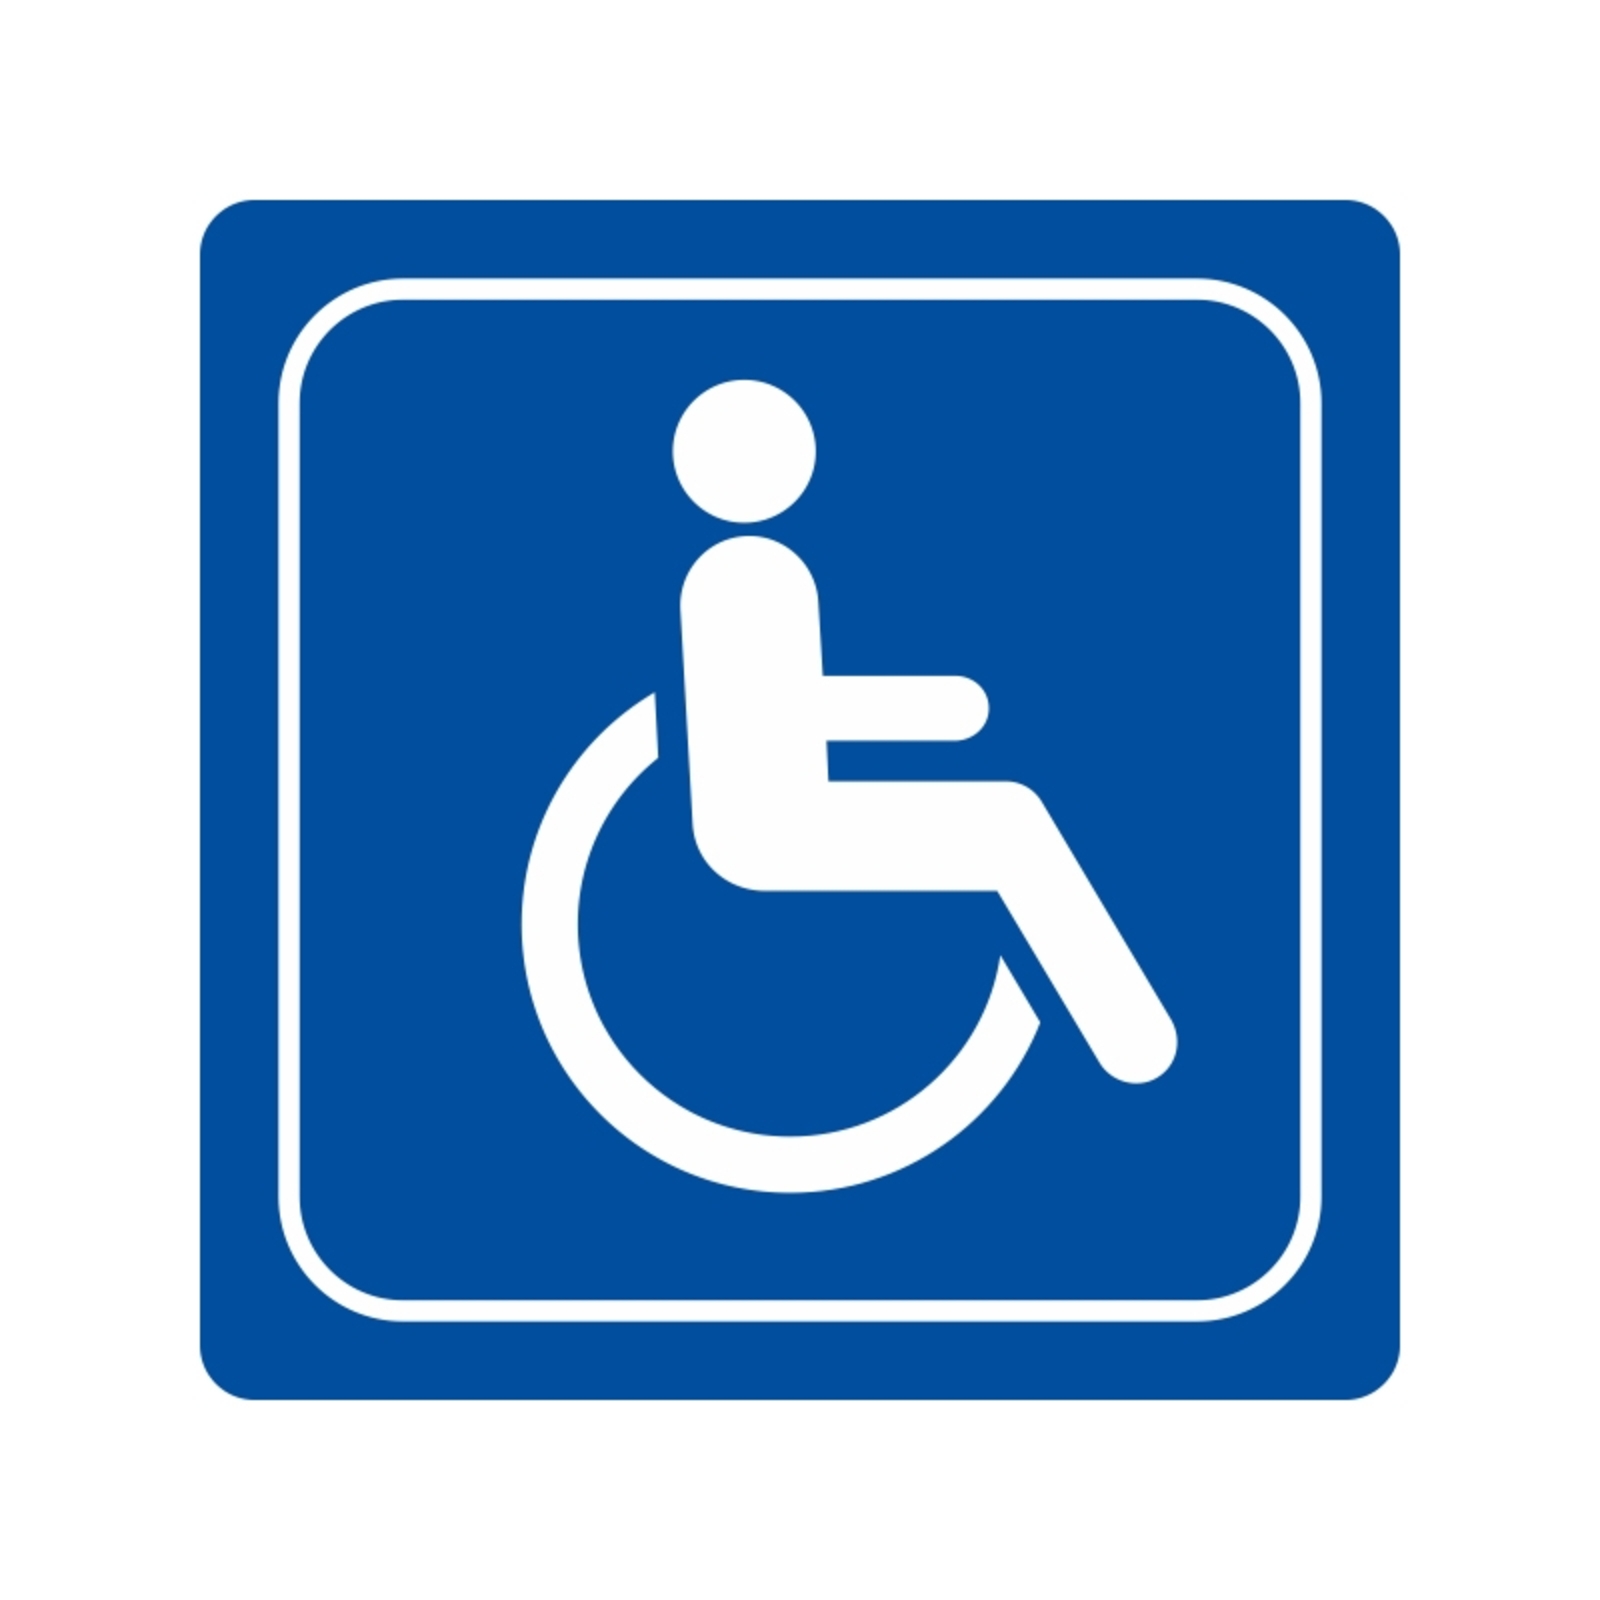 Доступно для инвалидов колясочников